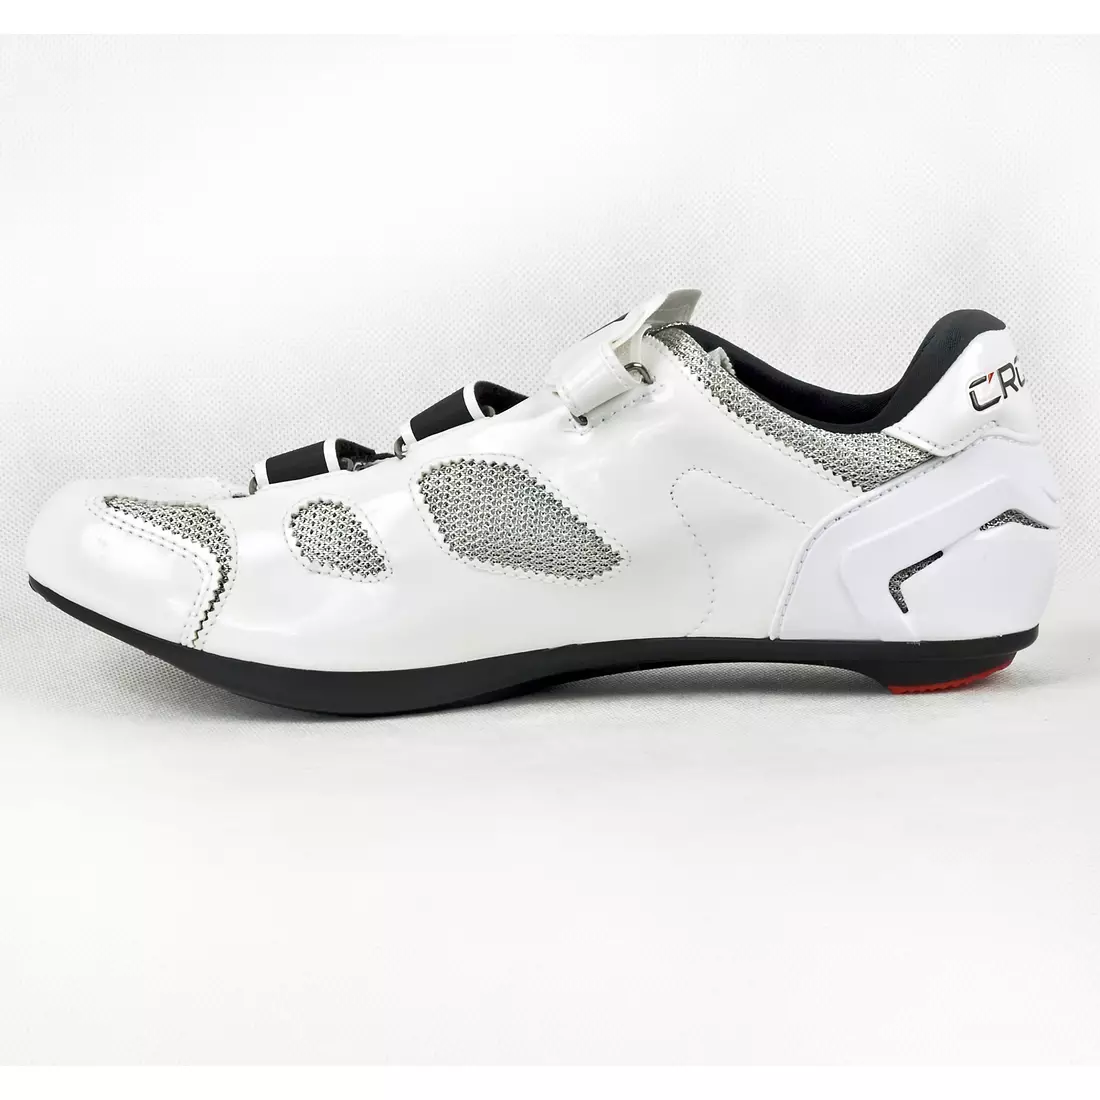 CRONO CLONE NYLON - pantofi de ciclism rutier - culoare: Alb